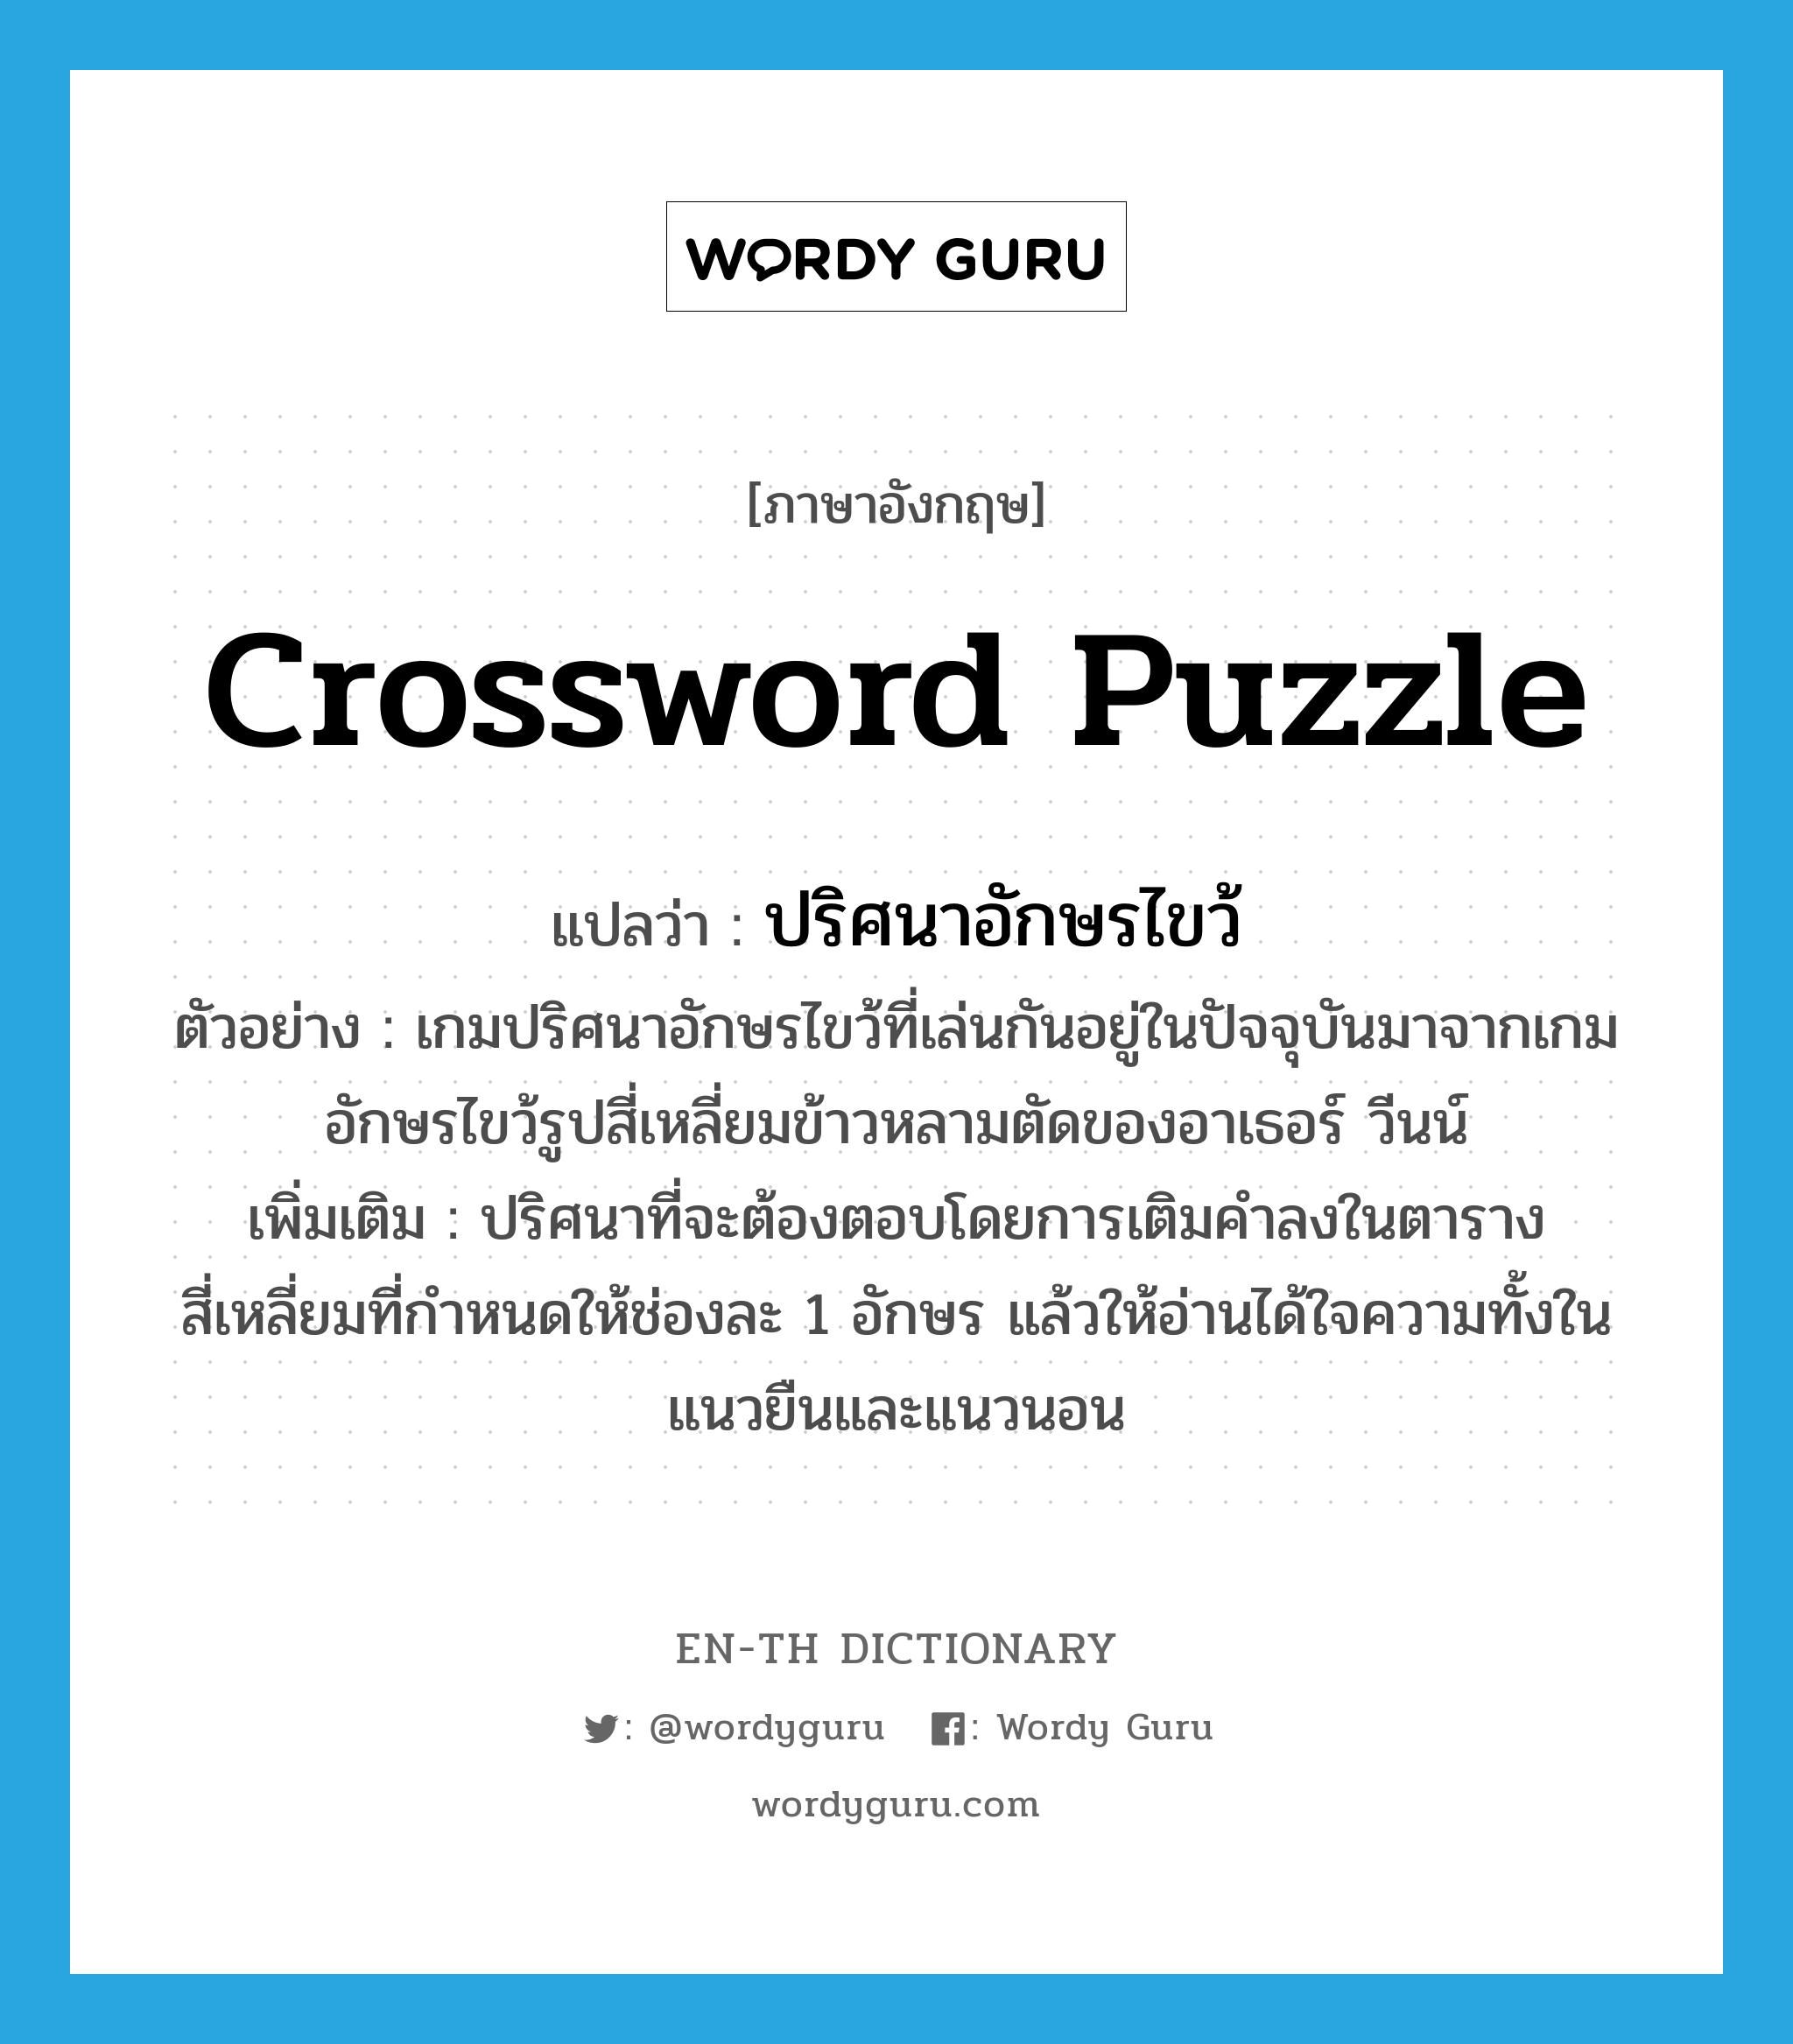 crossword puzzle แปลว่า?, คำศัพท์ภาษาอังกฤษ crossword puzzle แปลว่า ปริศนาอักษรไขว้ ประเภท N ตัวอย่าง เกมปริศนาอักษรไขว้ที่เล่นกันอยู่ในปัจจุบันมาจากเกมอักษรไขว้รูปสี่เหลี่ยมข้าวหลามตัดของอาเธอร์ วีนน์ เพิ่มเติม ปริศนาที่จะต้องตอบโดยการเติมคำลงในตารางสี่เหลี่ยมที่กำหนดให้ช่องละ 1 อักษร แล้วให้อ่านได้ใจความทั้งในแนวยืนและแนวนอน หมวด N